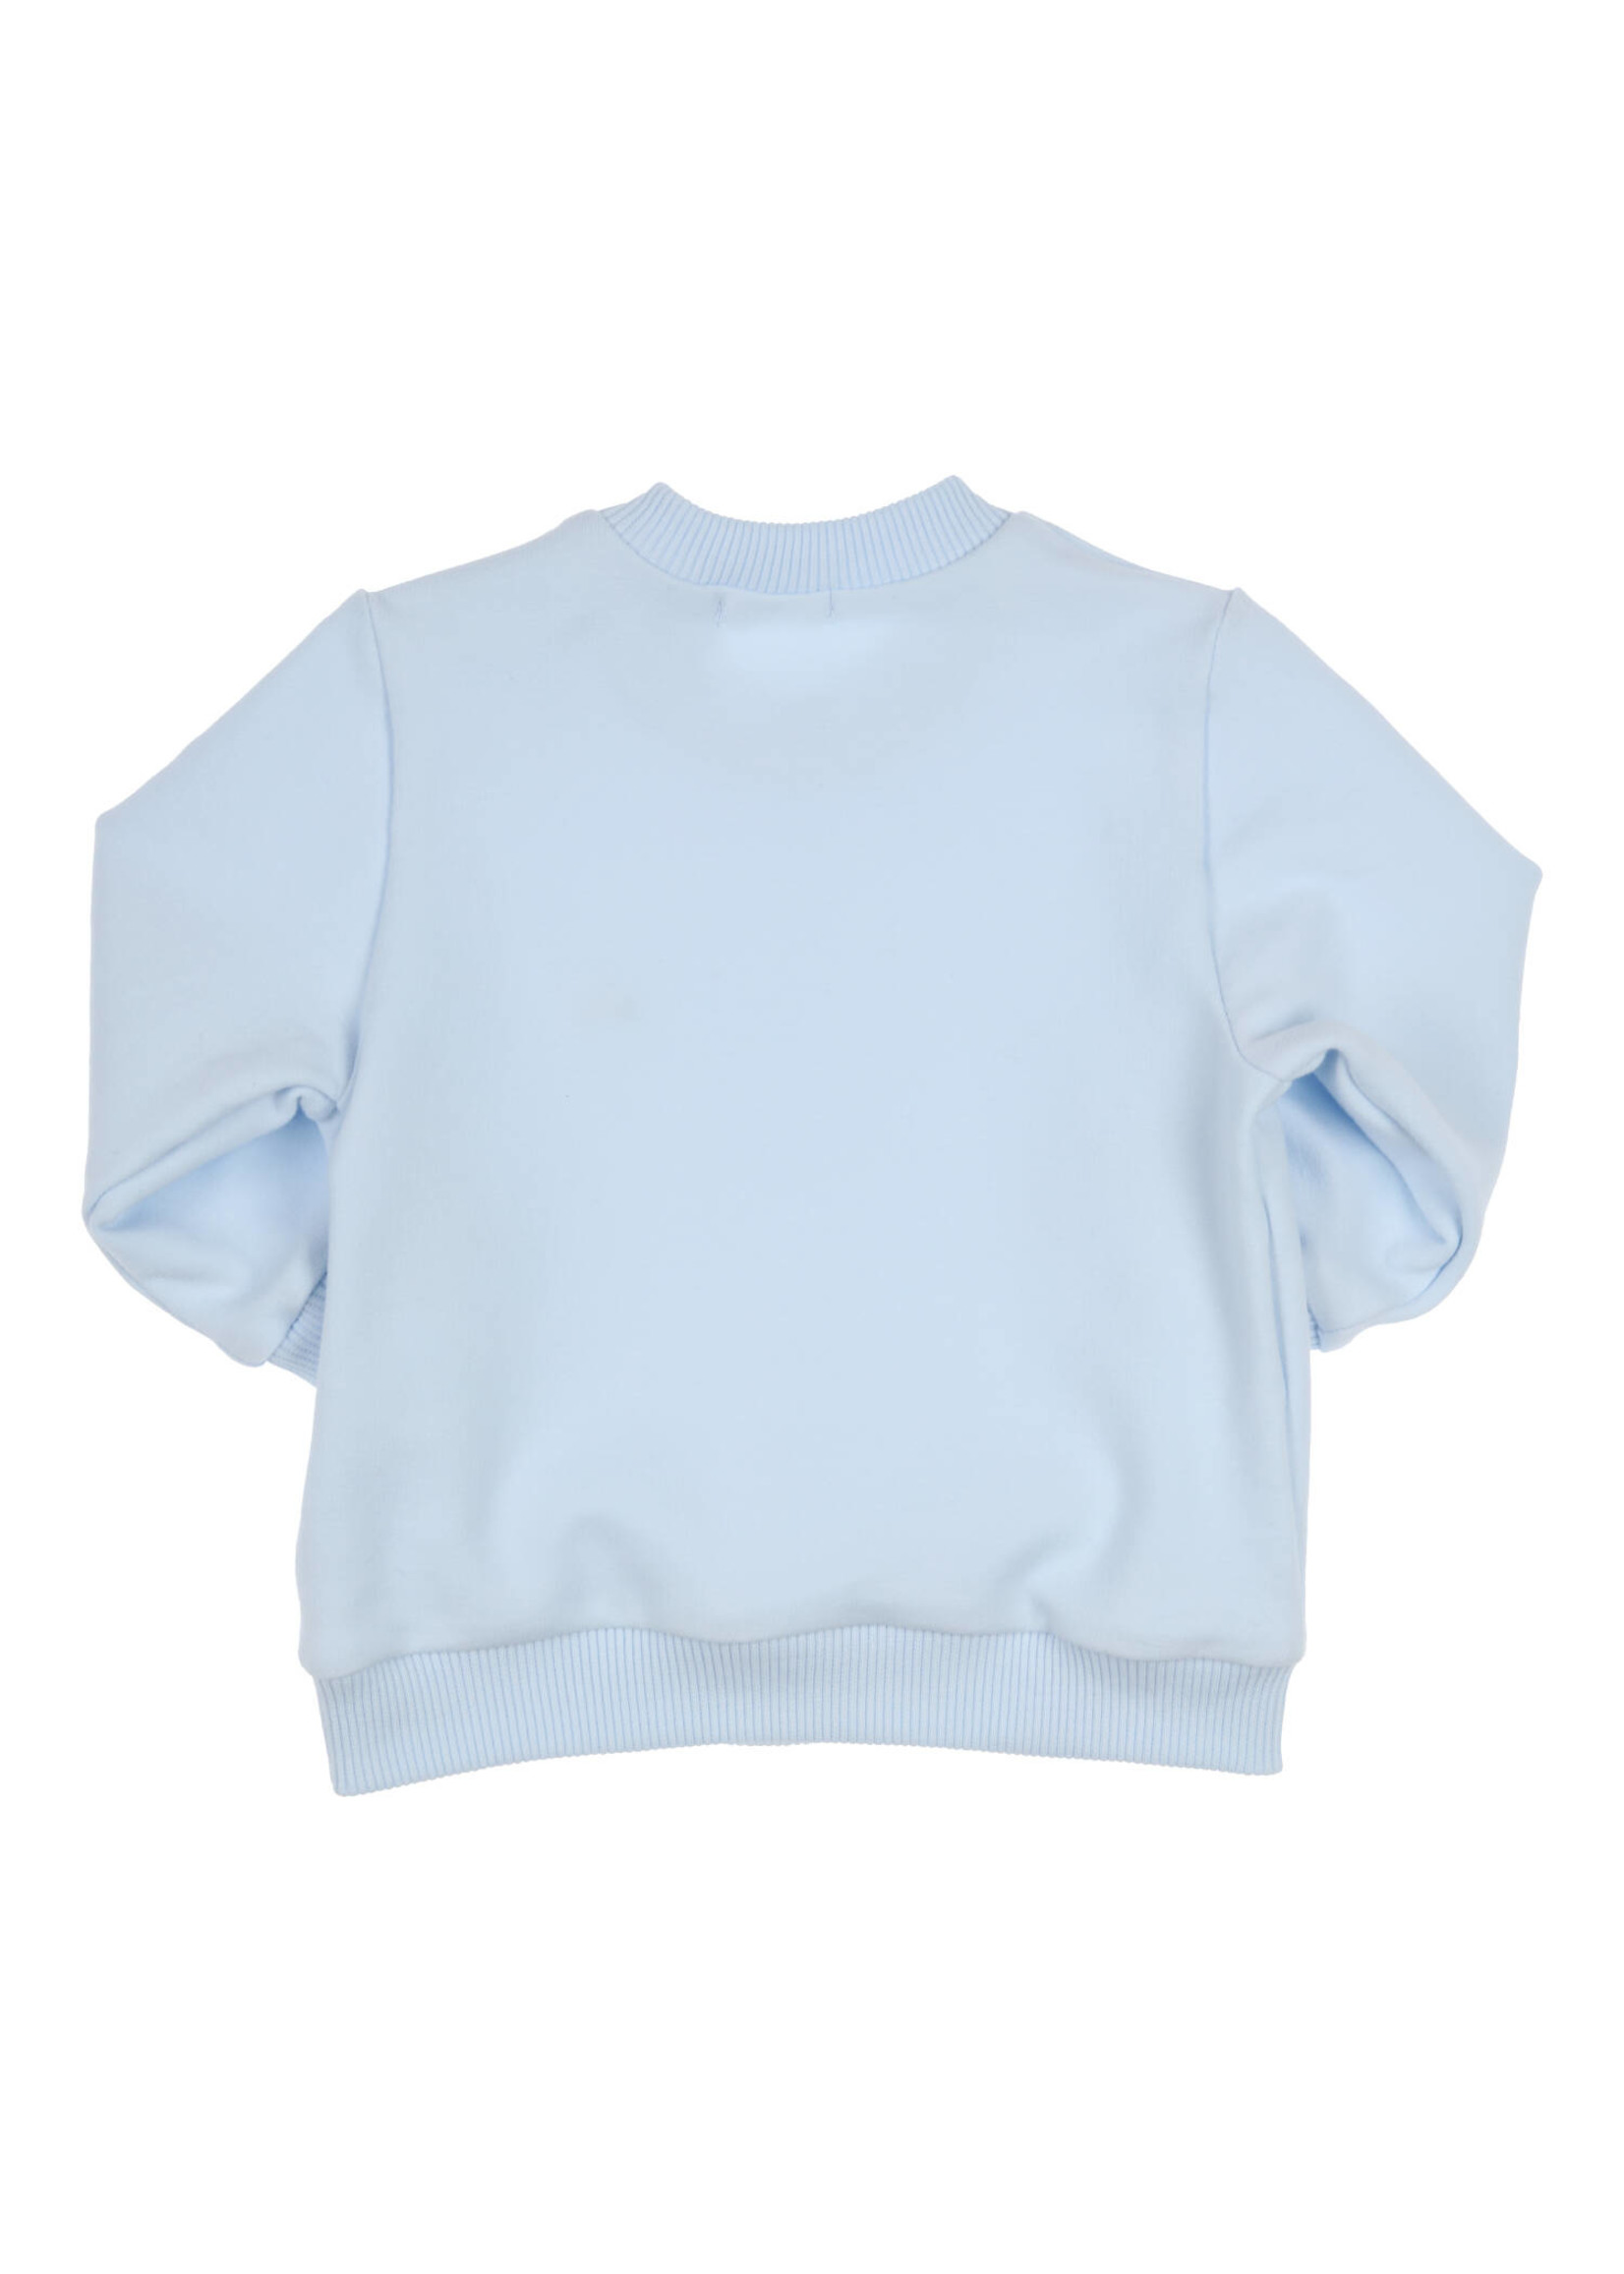 Gymp Sweater Carbon Light Blue 352-3202-20